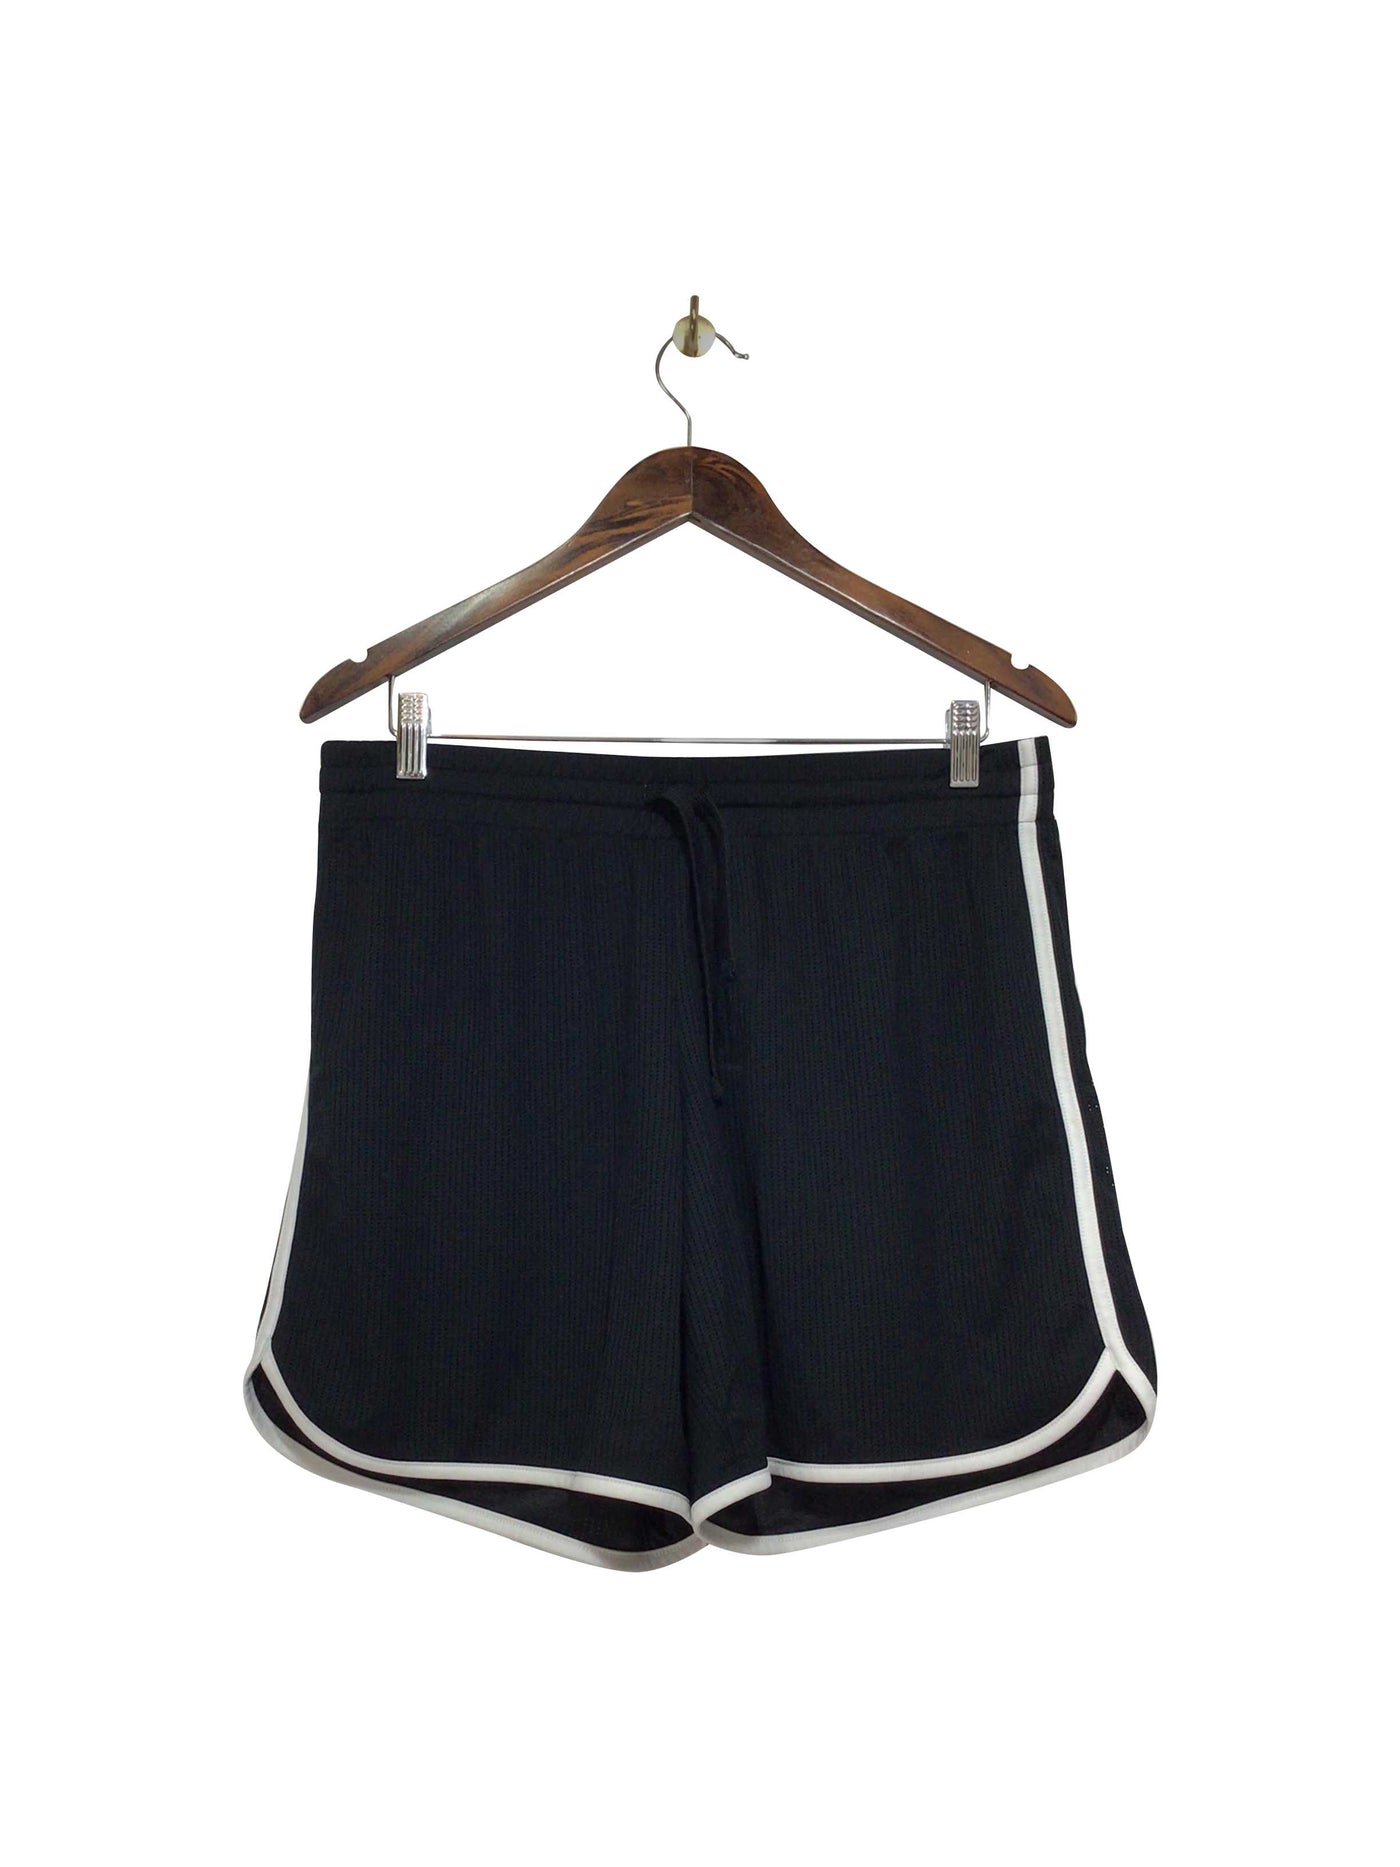 ATHLETIC WORKS Regular fit Pant Shorts in Black  -  L  11.29 Koop